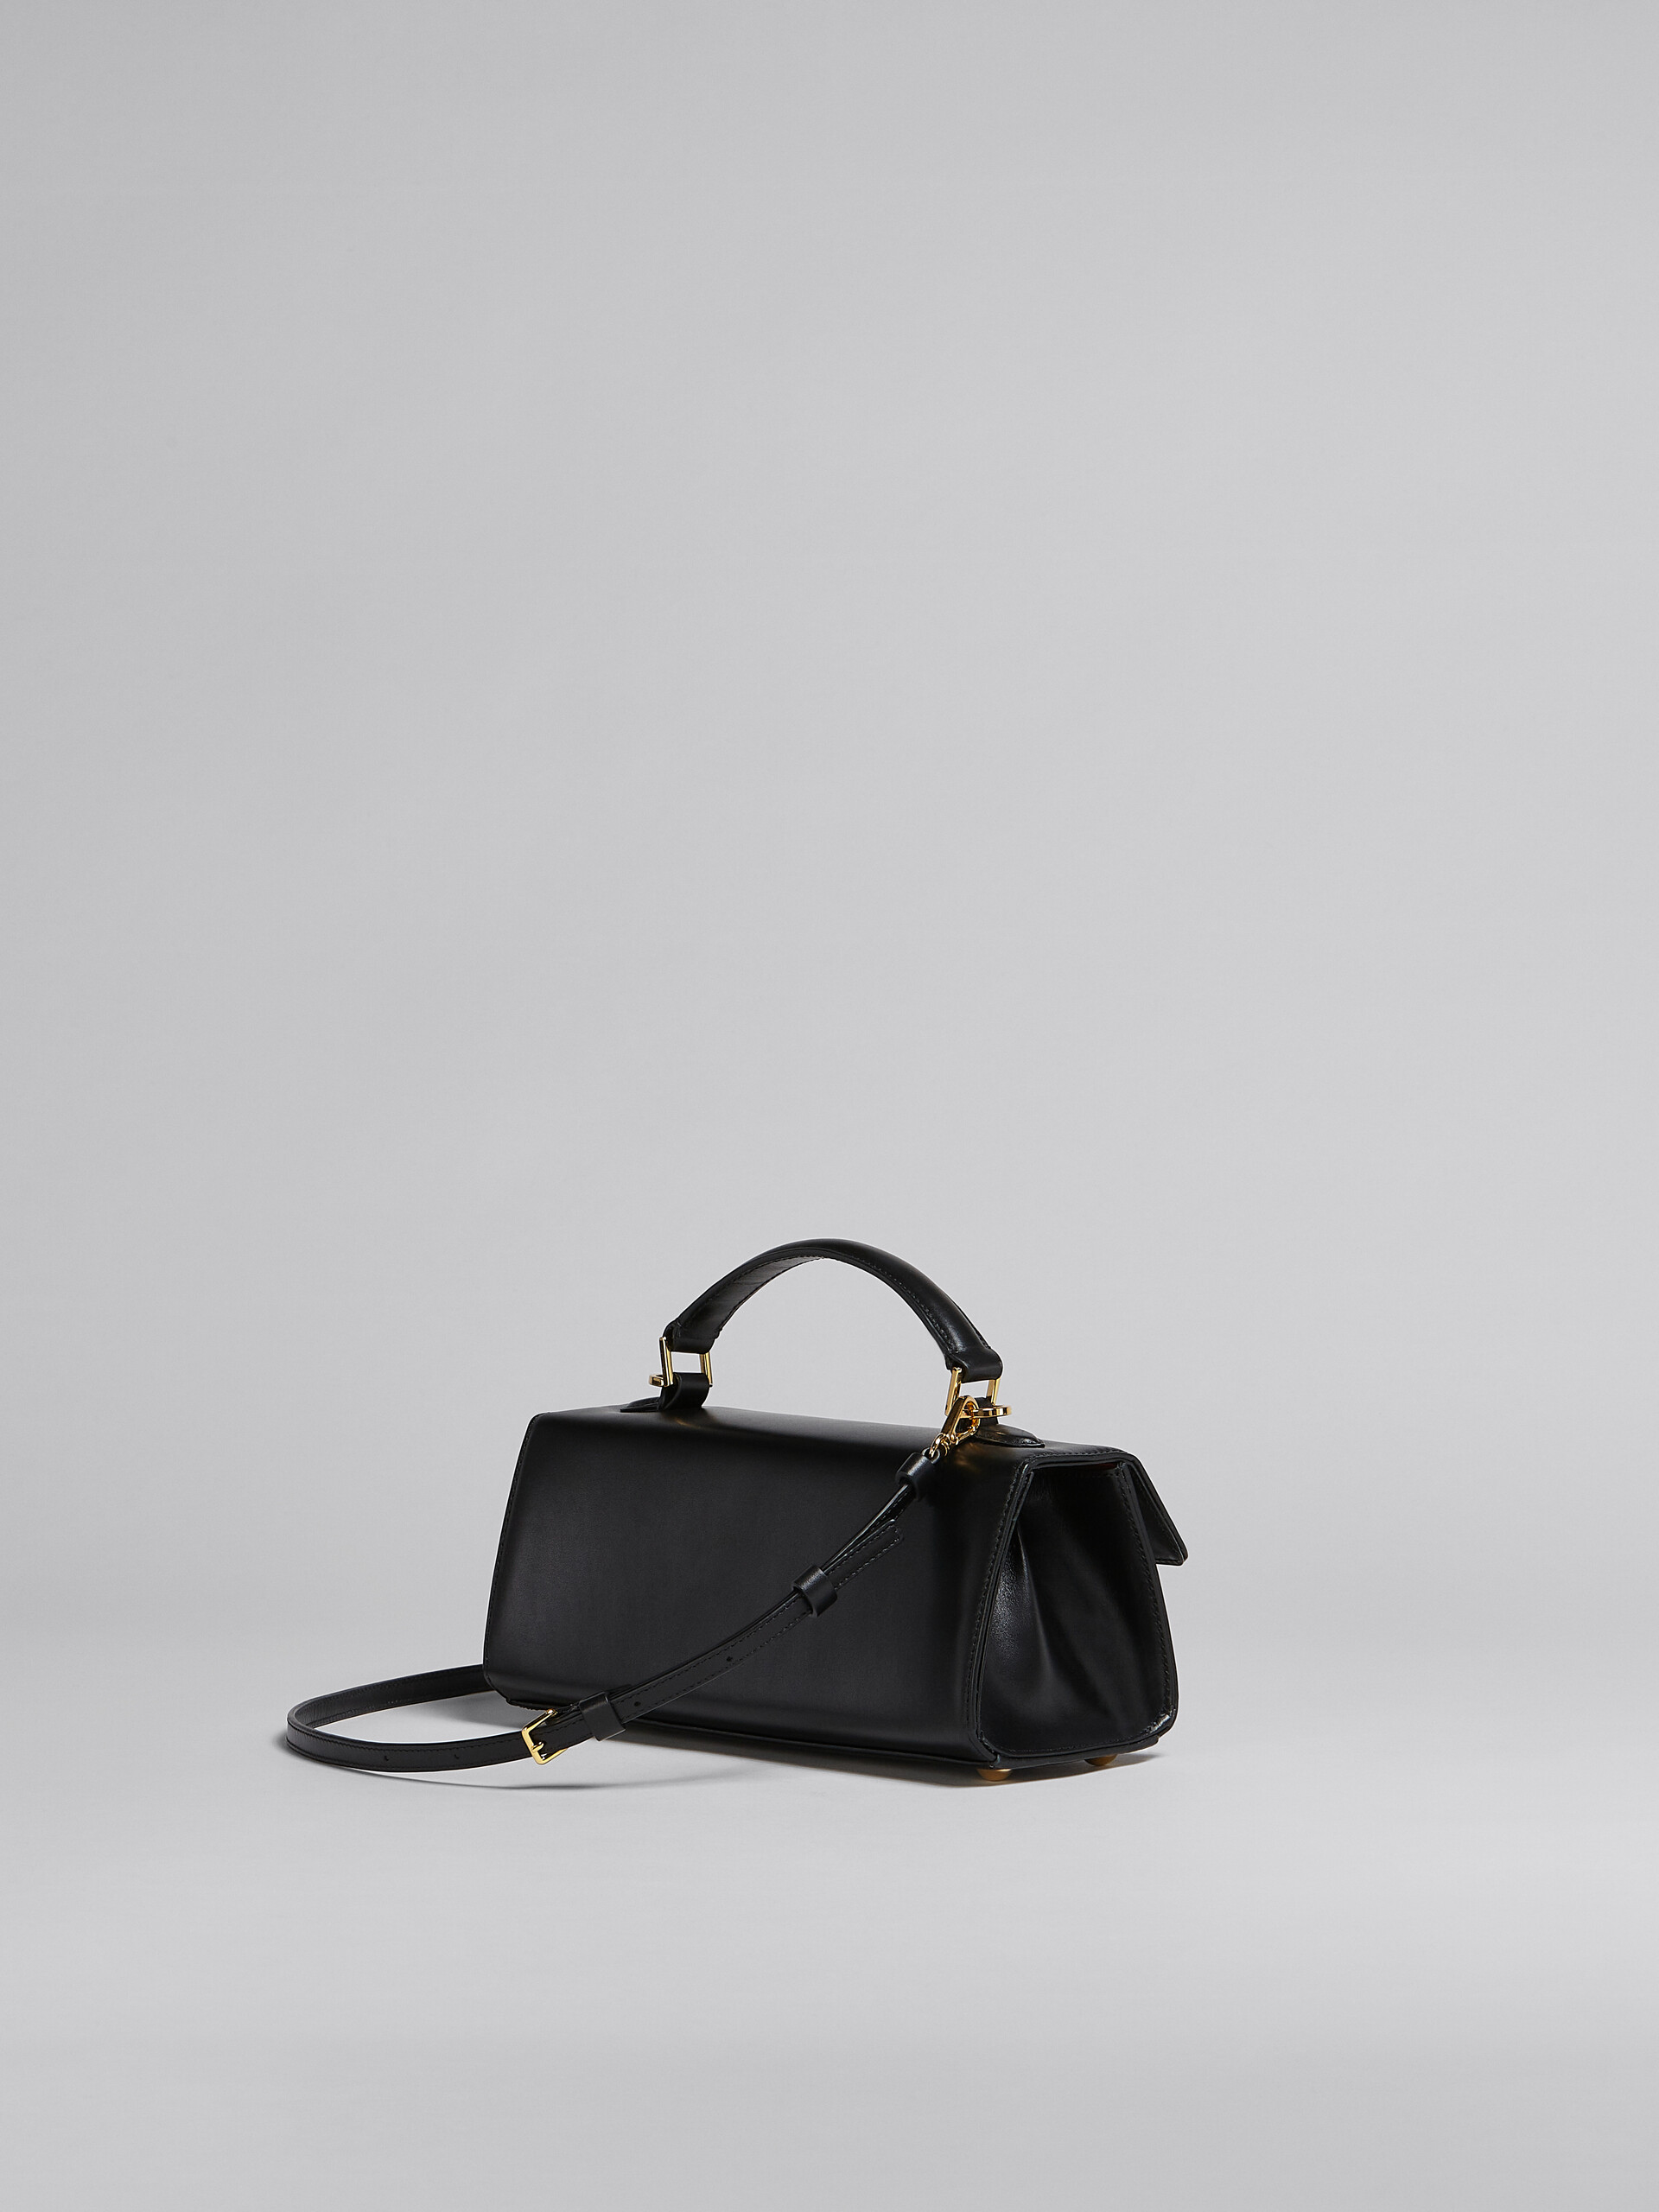 Relativity Medium Bag in black leather - Handbags - Image 3